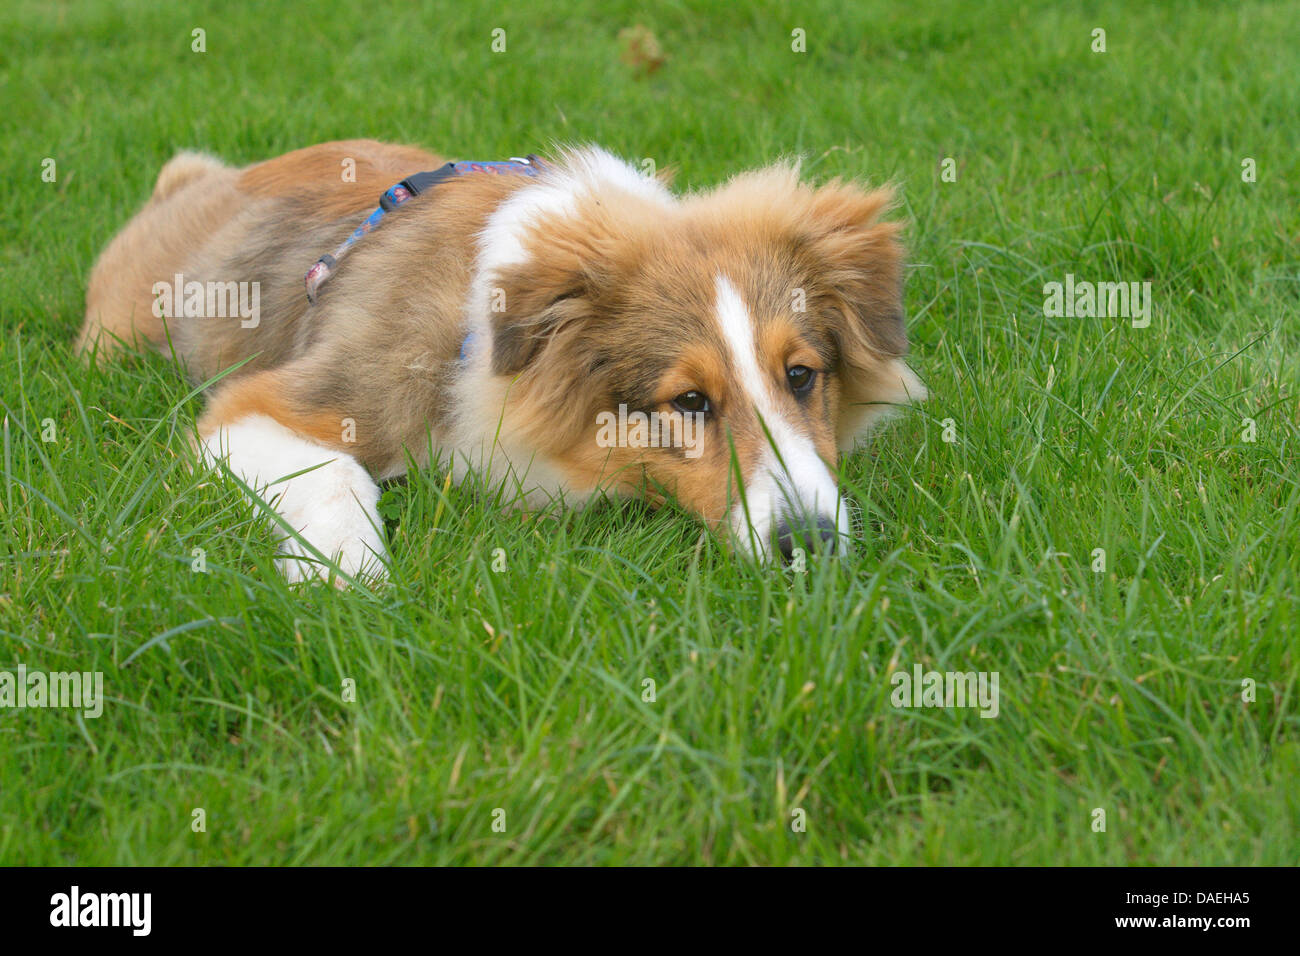 Shetland Sheepdog (Canis lupus f. familiaris), young Shetland Sheepdog lying bored on grass Stock Photo